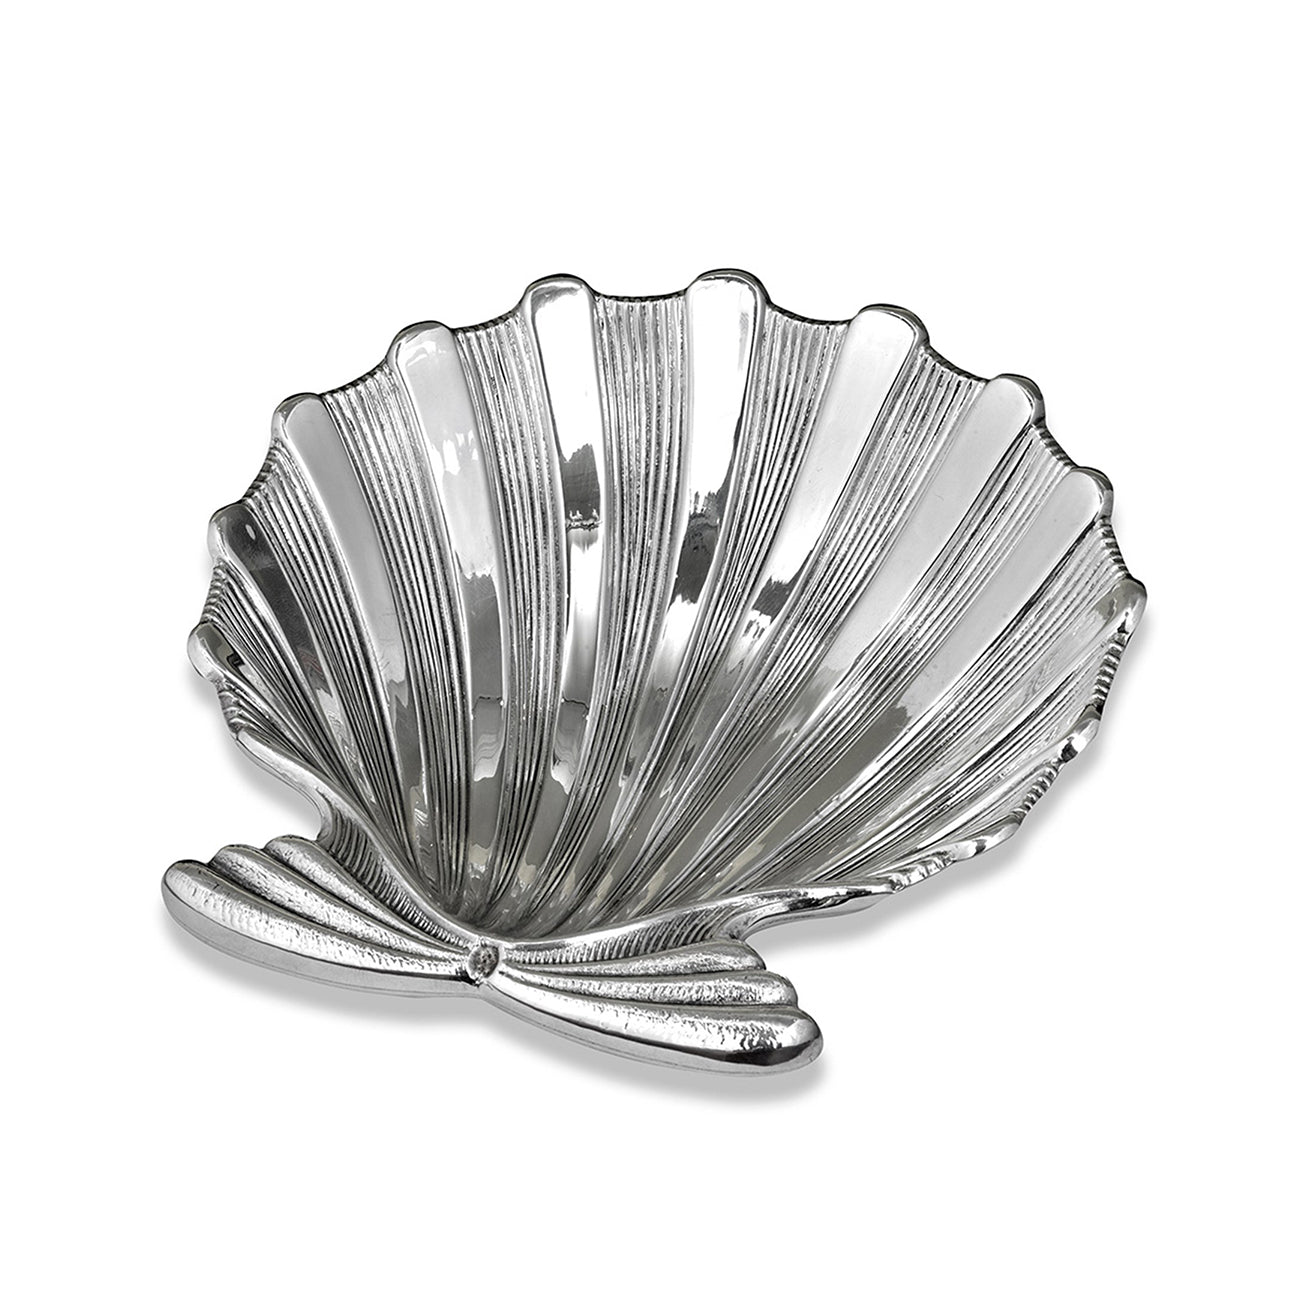 Buccellati Silver - Small Silver Chlamys Shell Dish